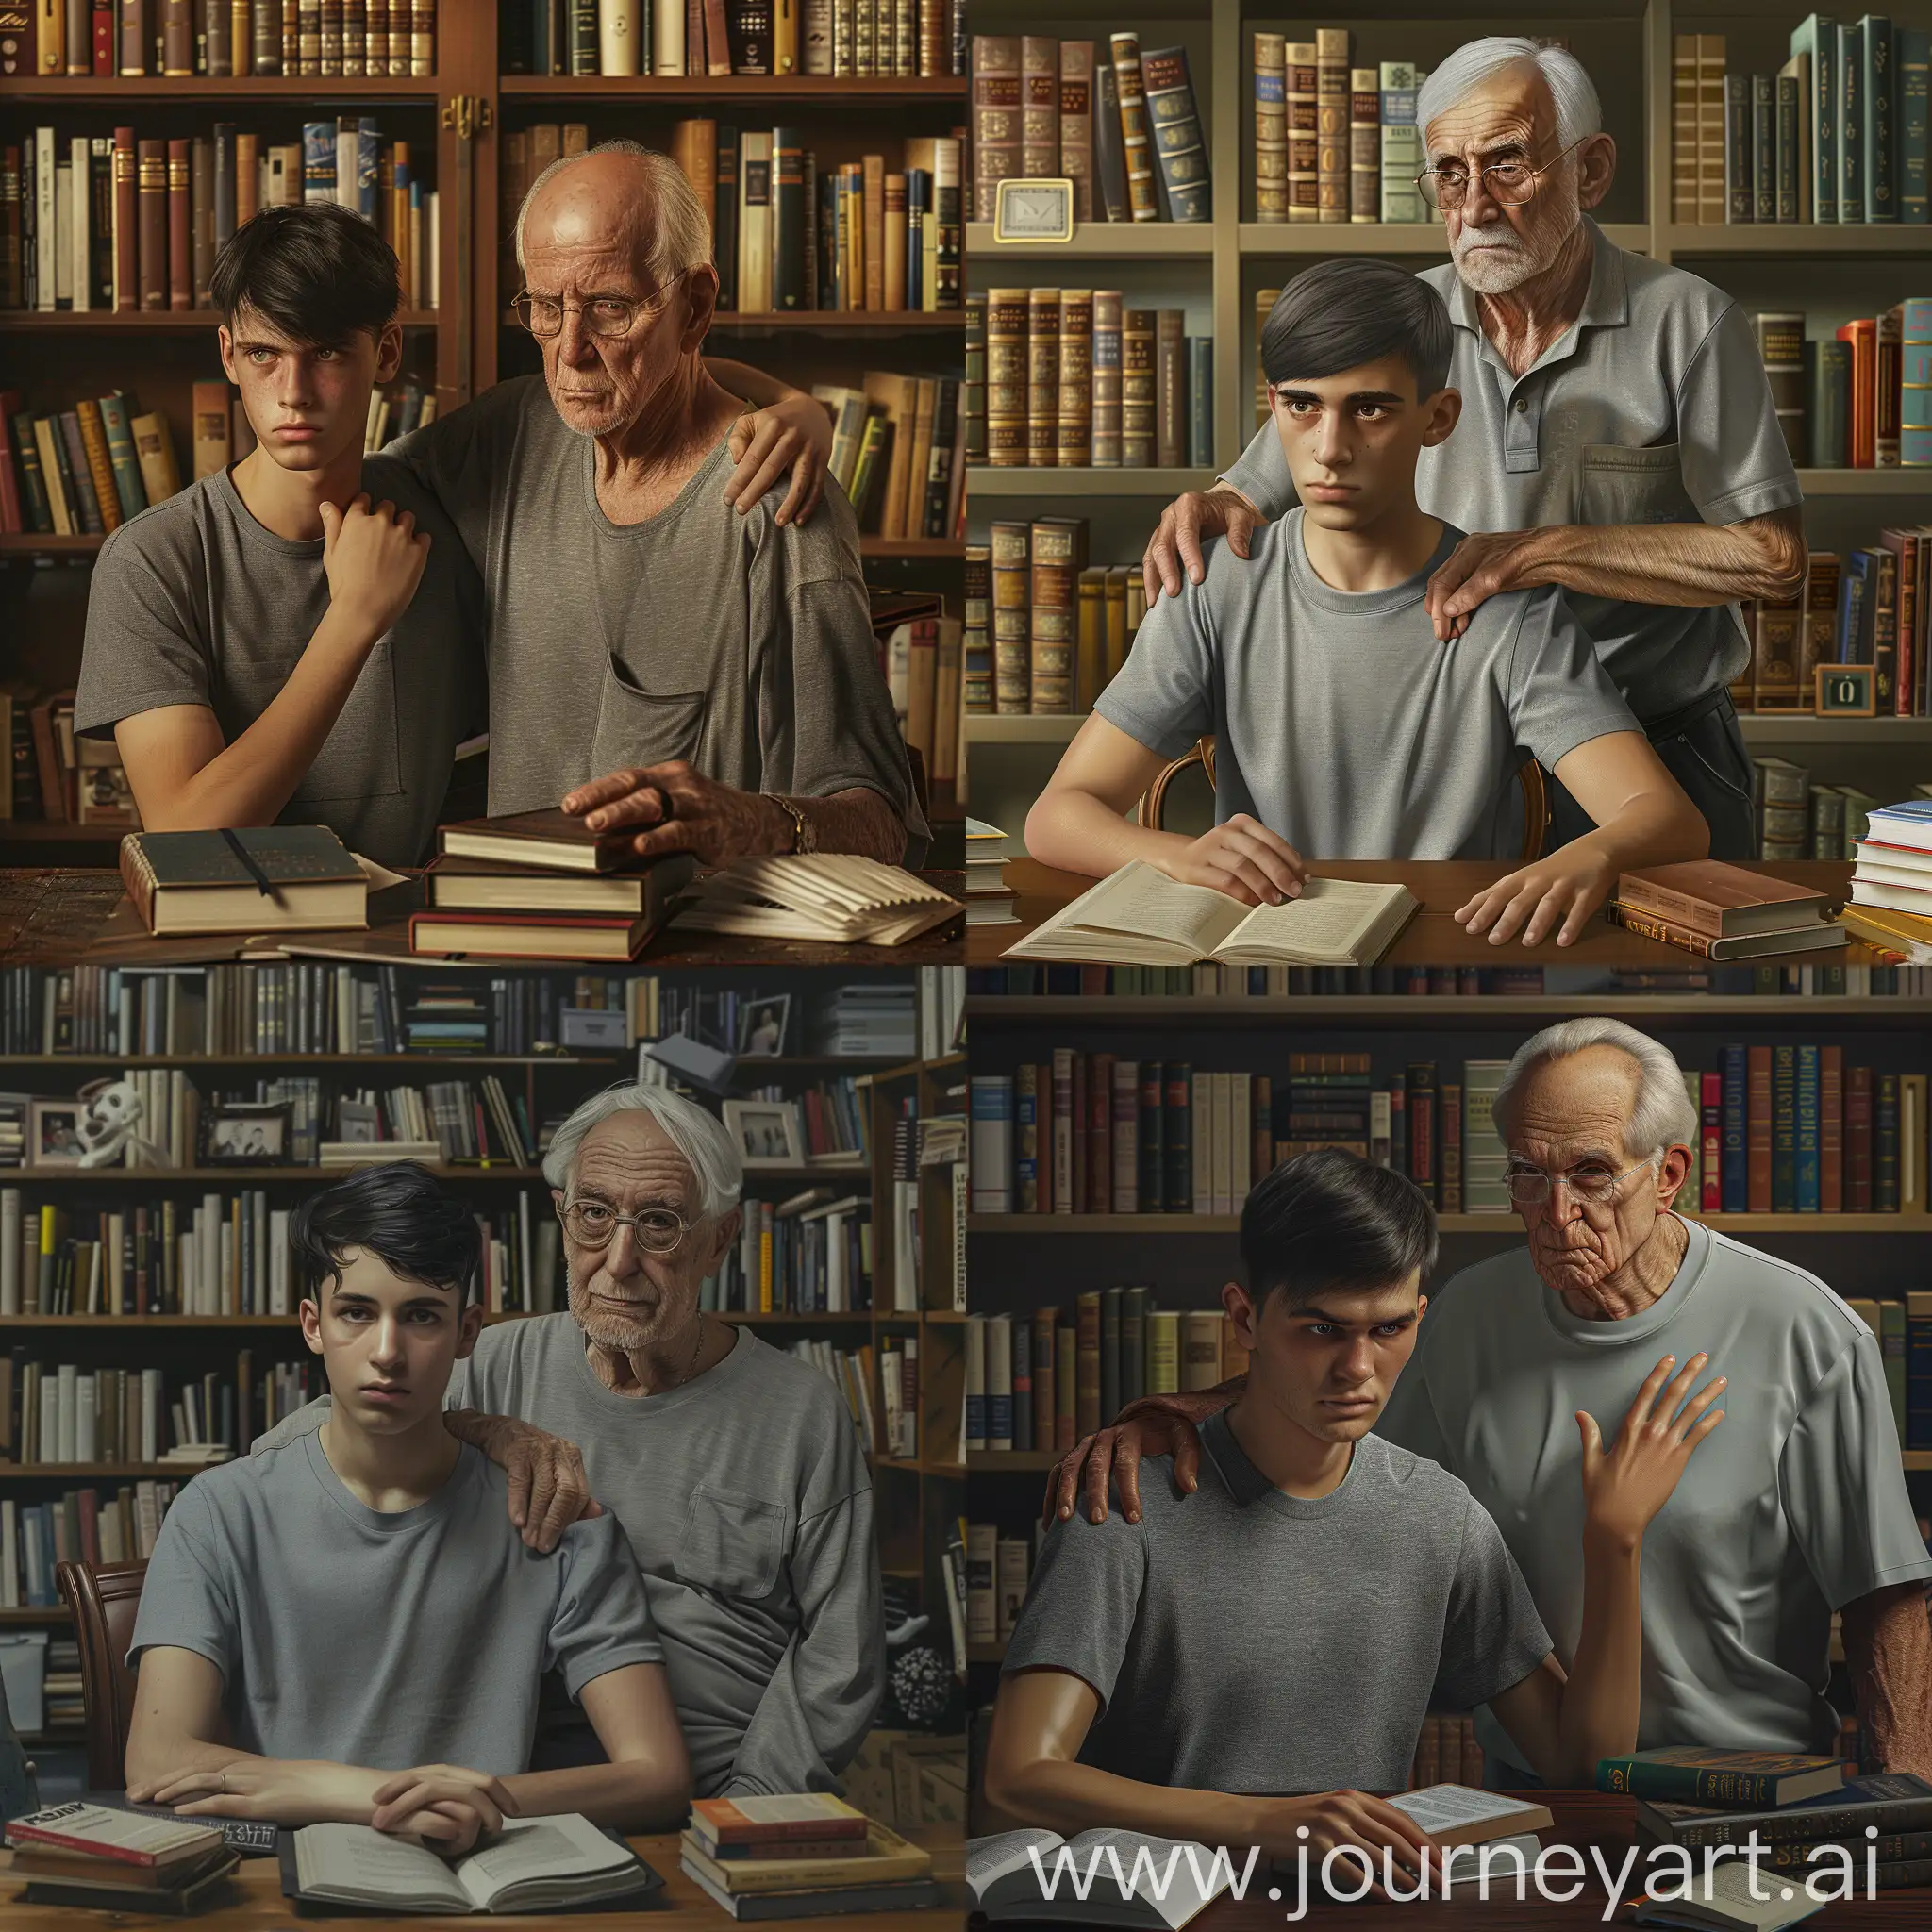 Intergenerational-Bonding-in-HyperRealistic-Bookstore-Scene